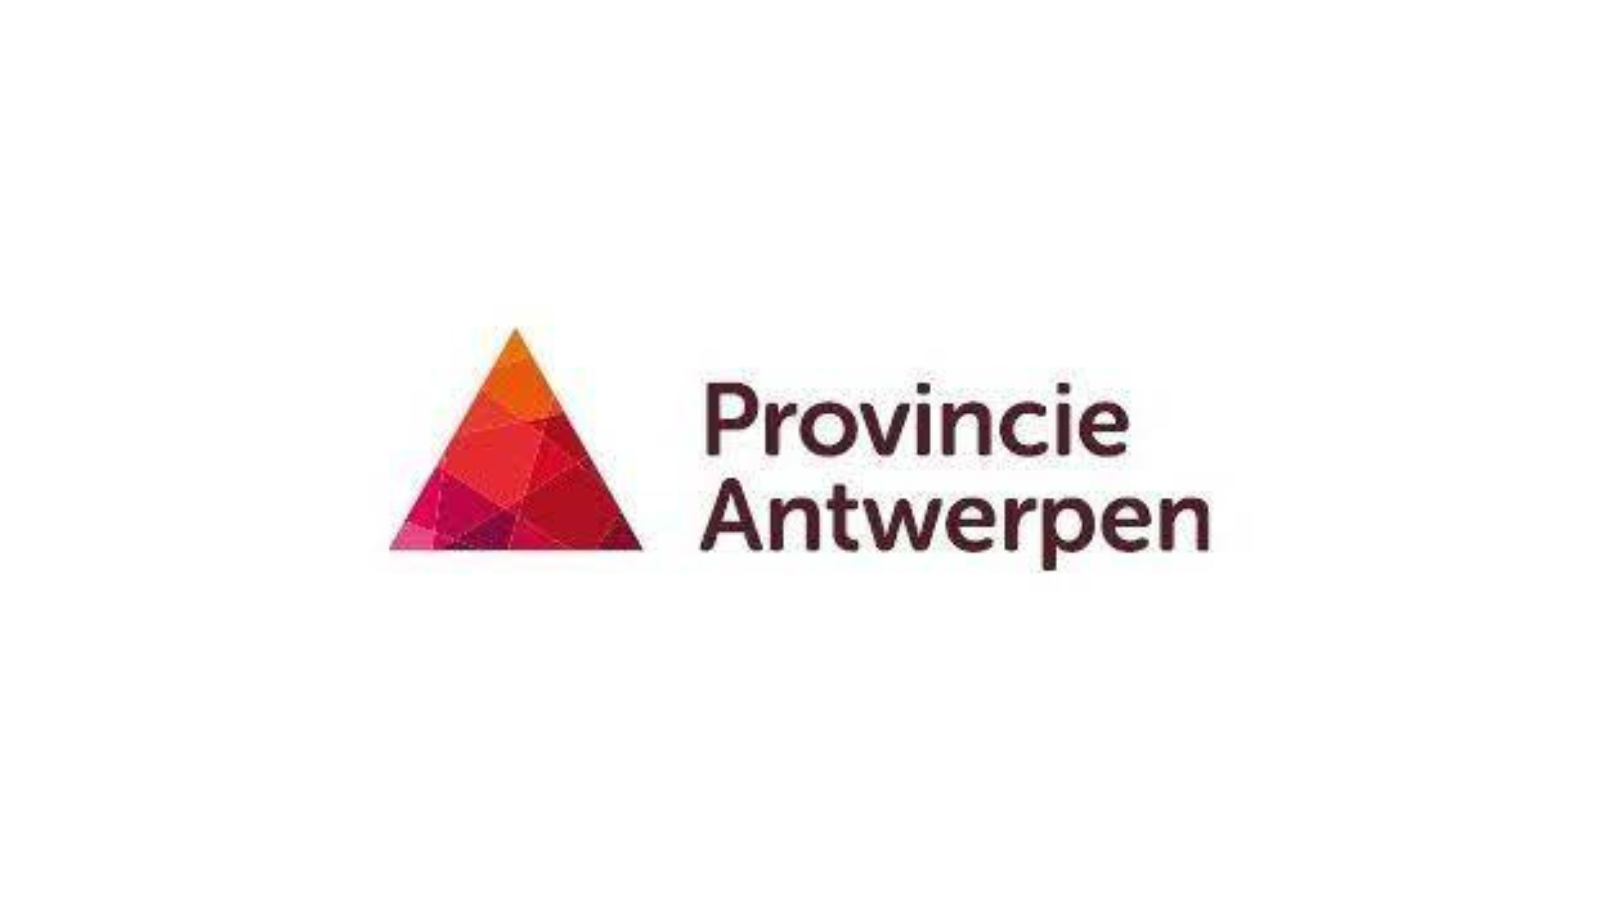 Province of Antwerp